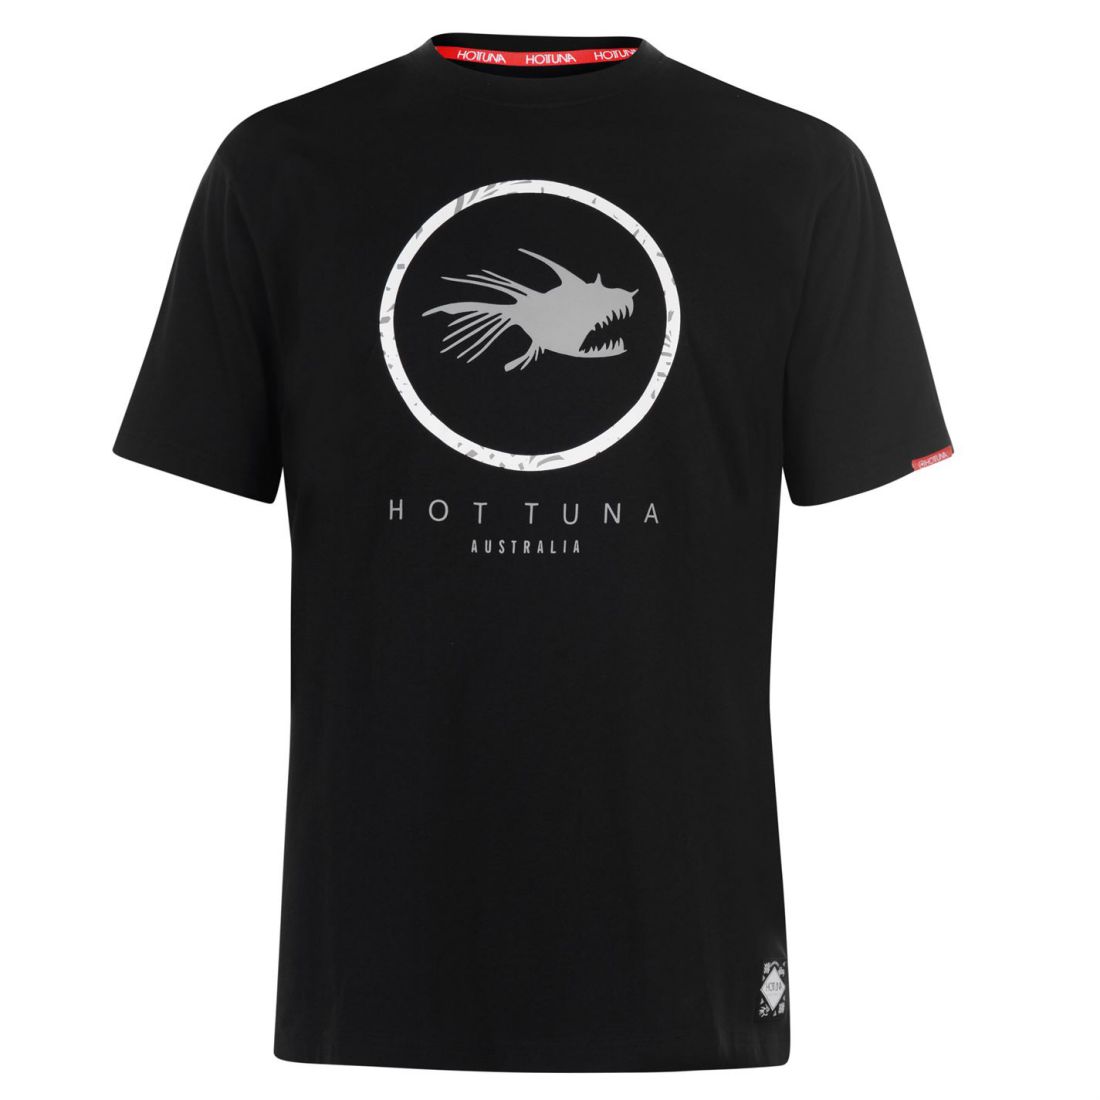 NEW Hot Tuna Mens Logo T Shirt Tee Top Short Sleeve Round Neck Black S-3XL.